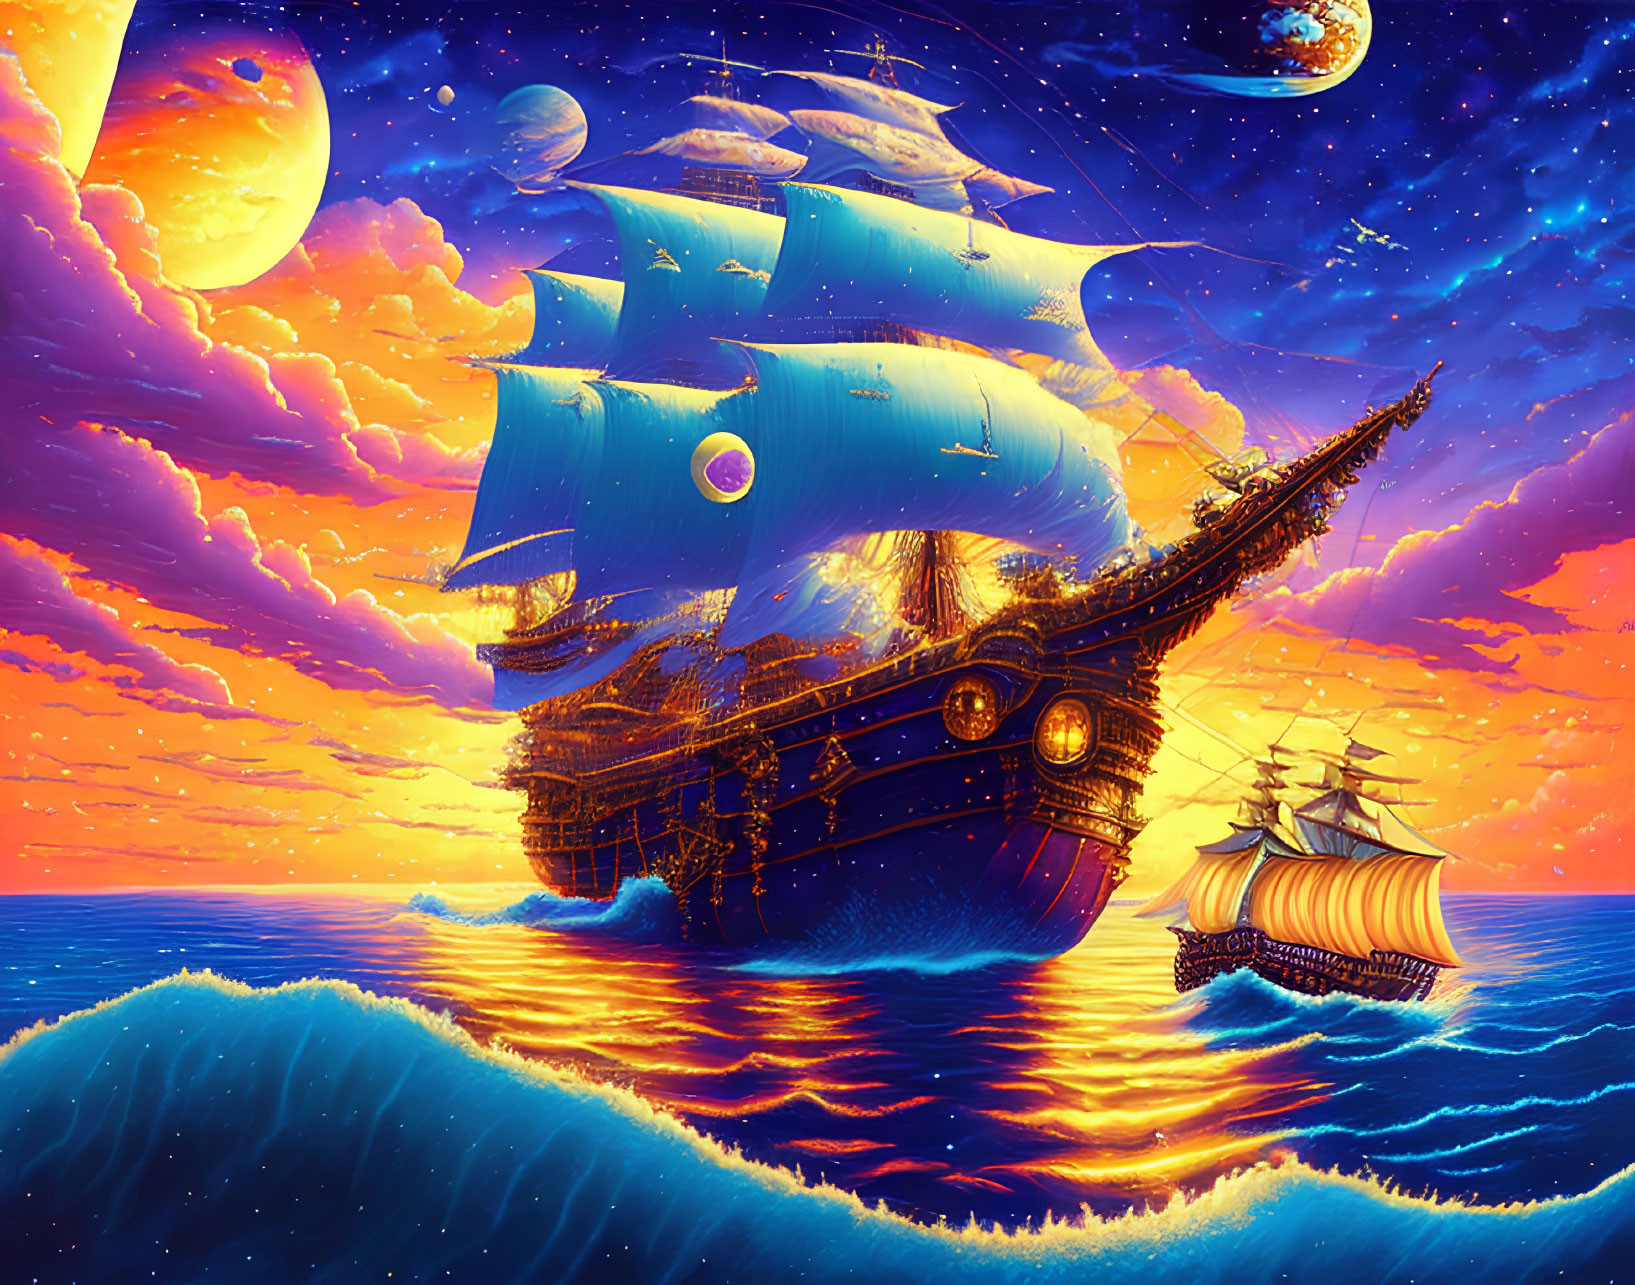 Fantasy artwork of sailing ships on wavy seas under surreal sky